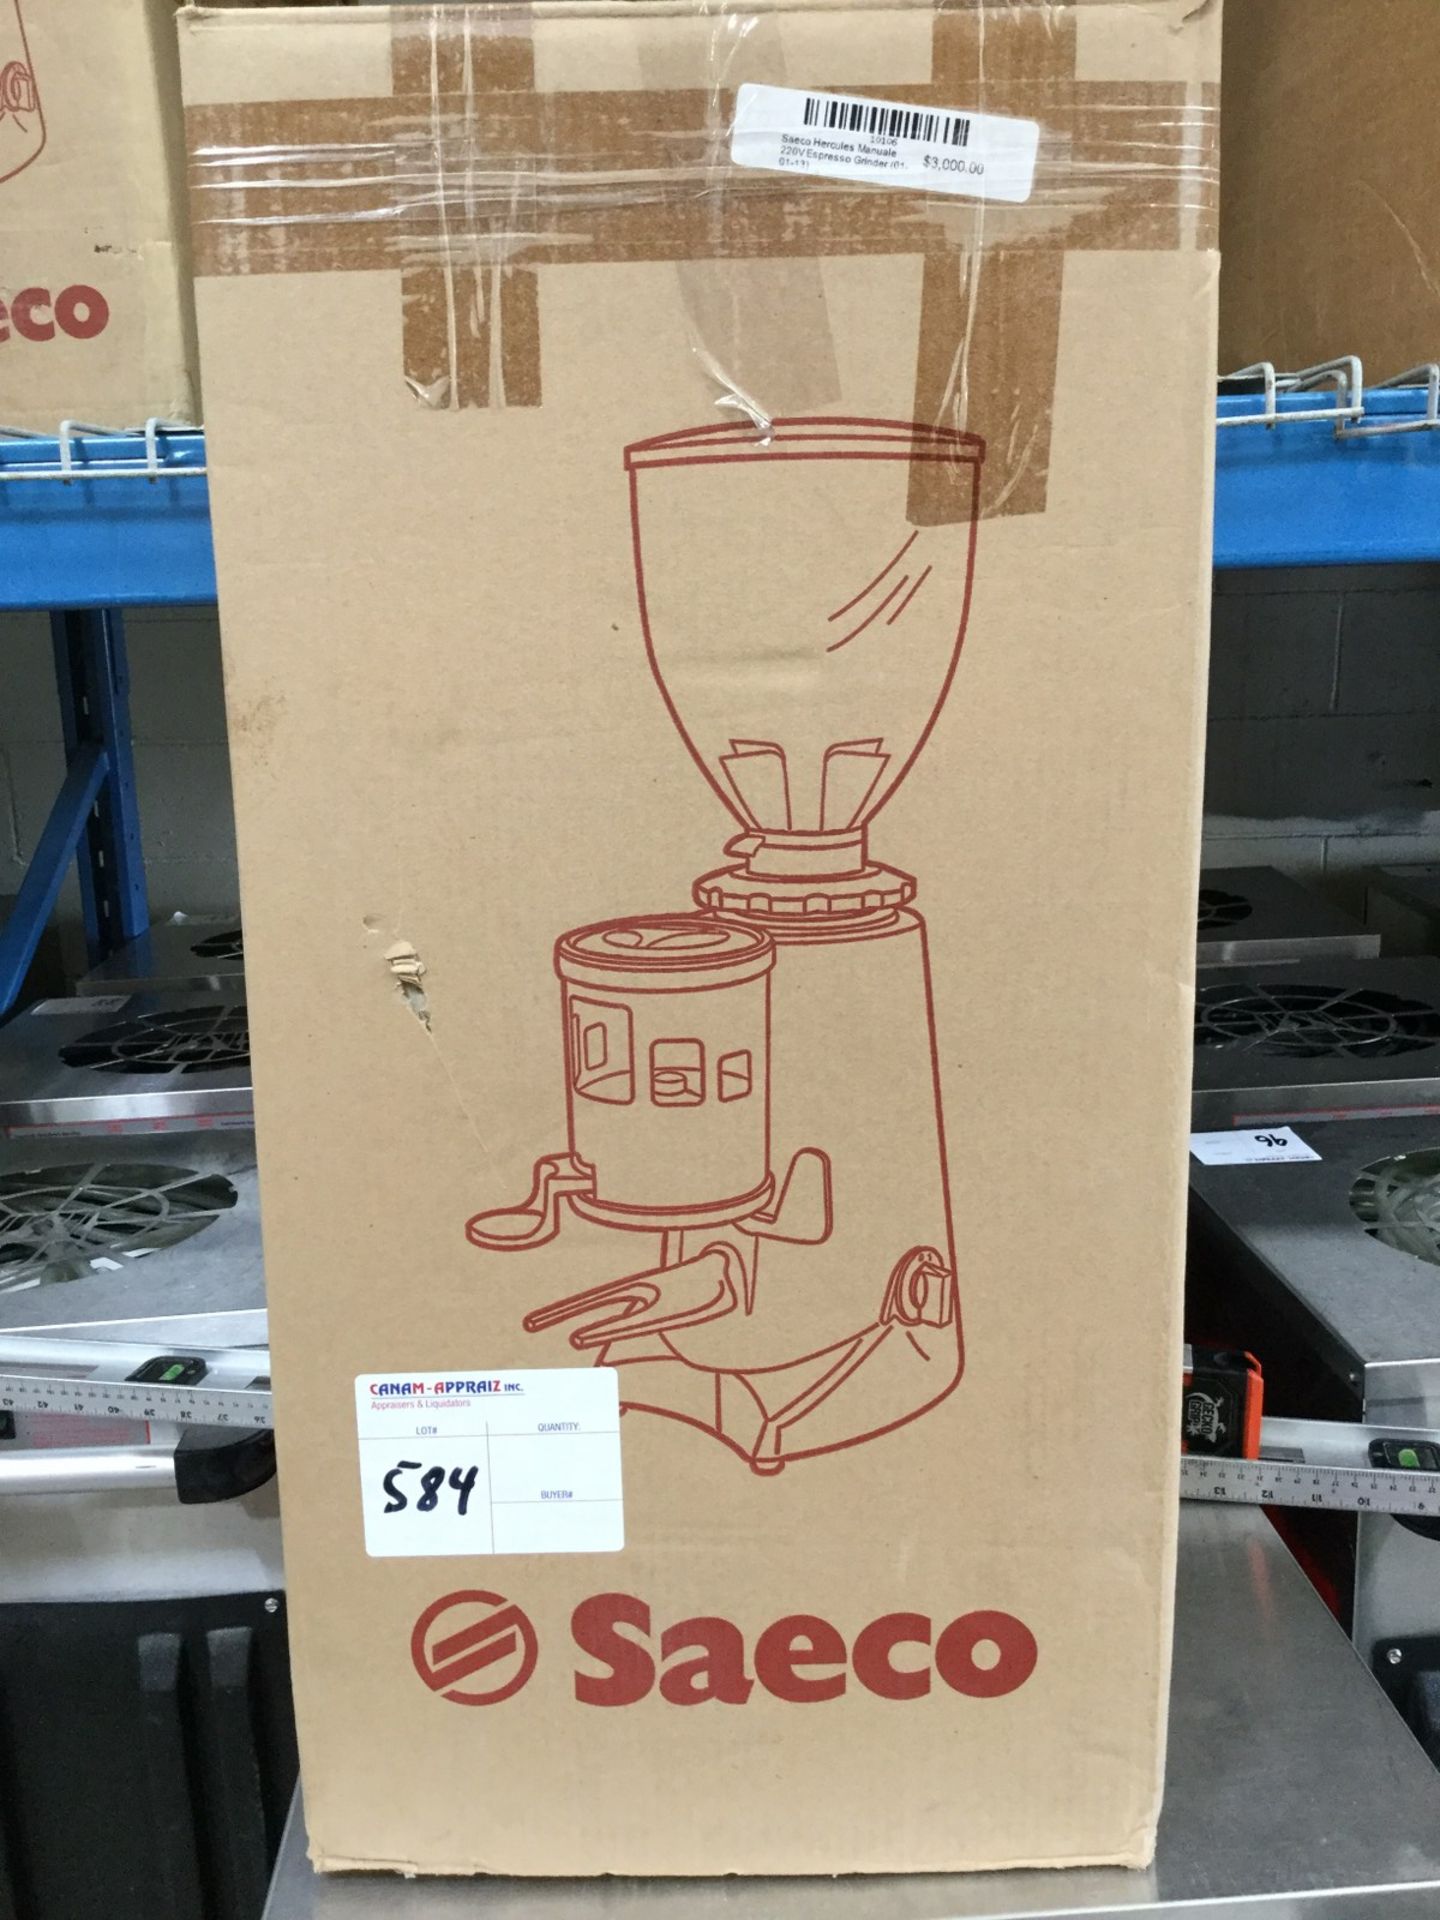 1 X SAECO - HERCULES MANUAL COFFEE GRINDER (SILVER) - MODEL # DG002